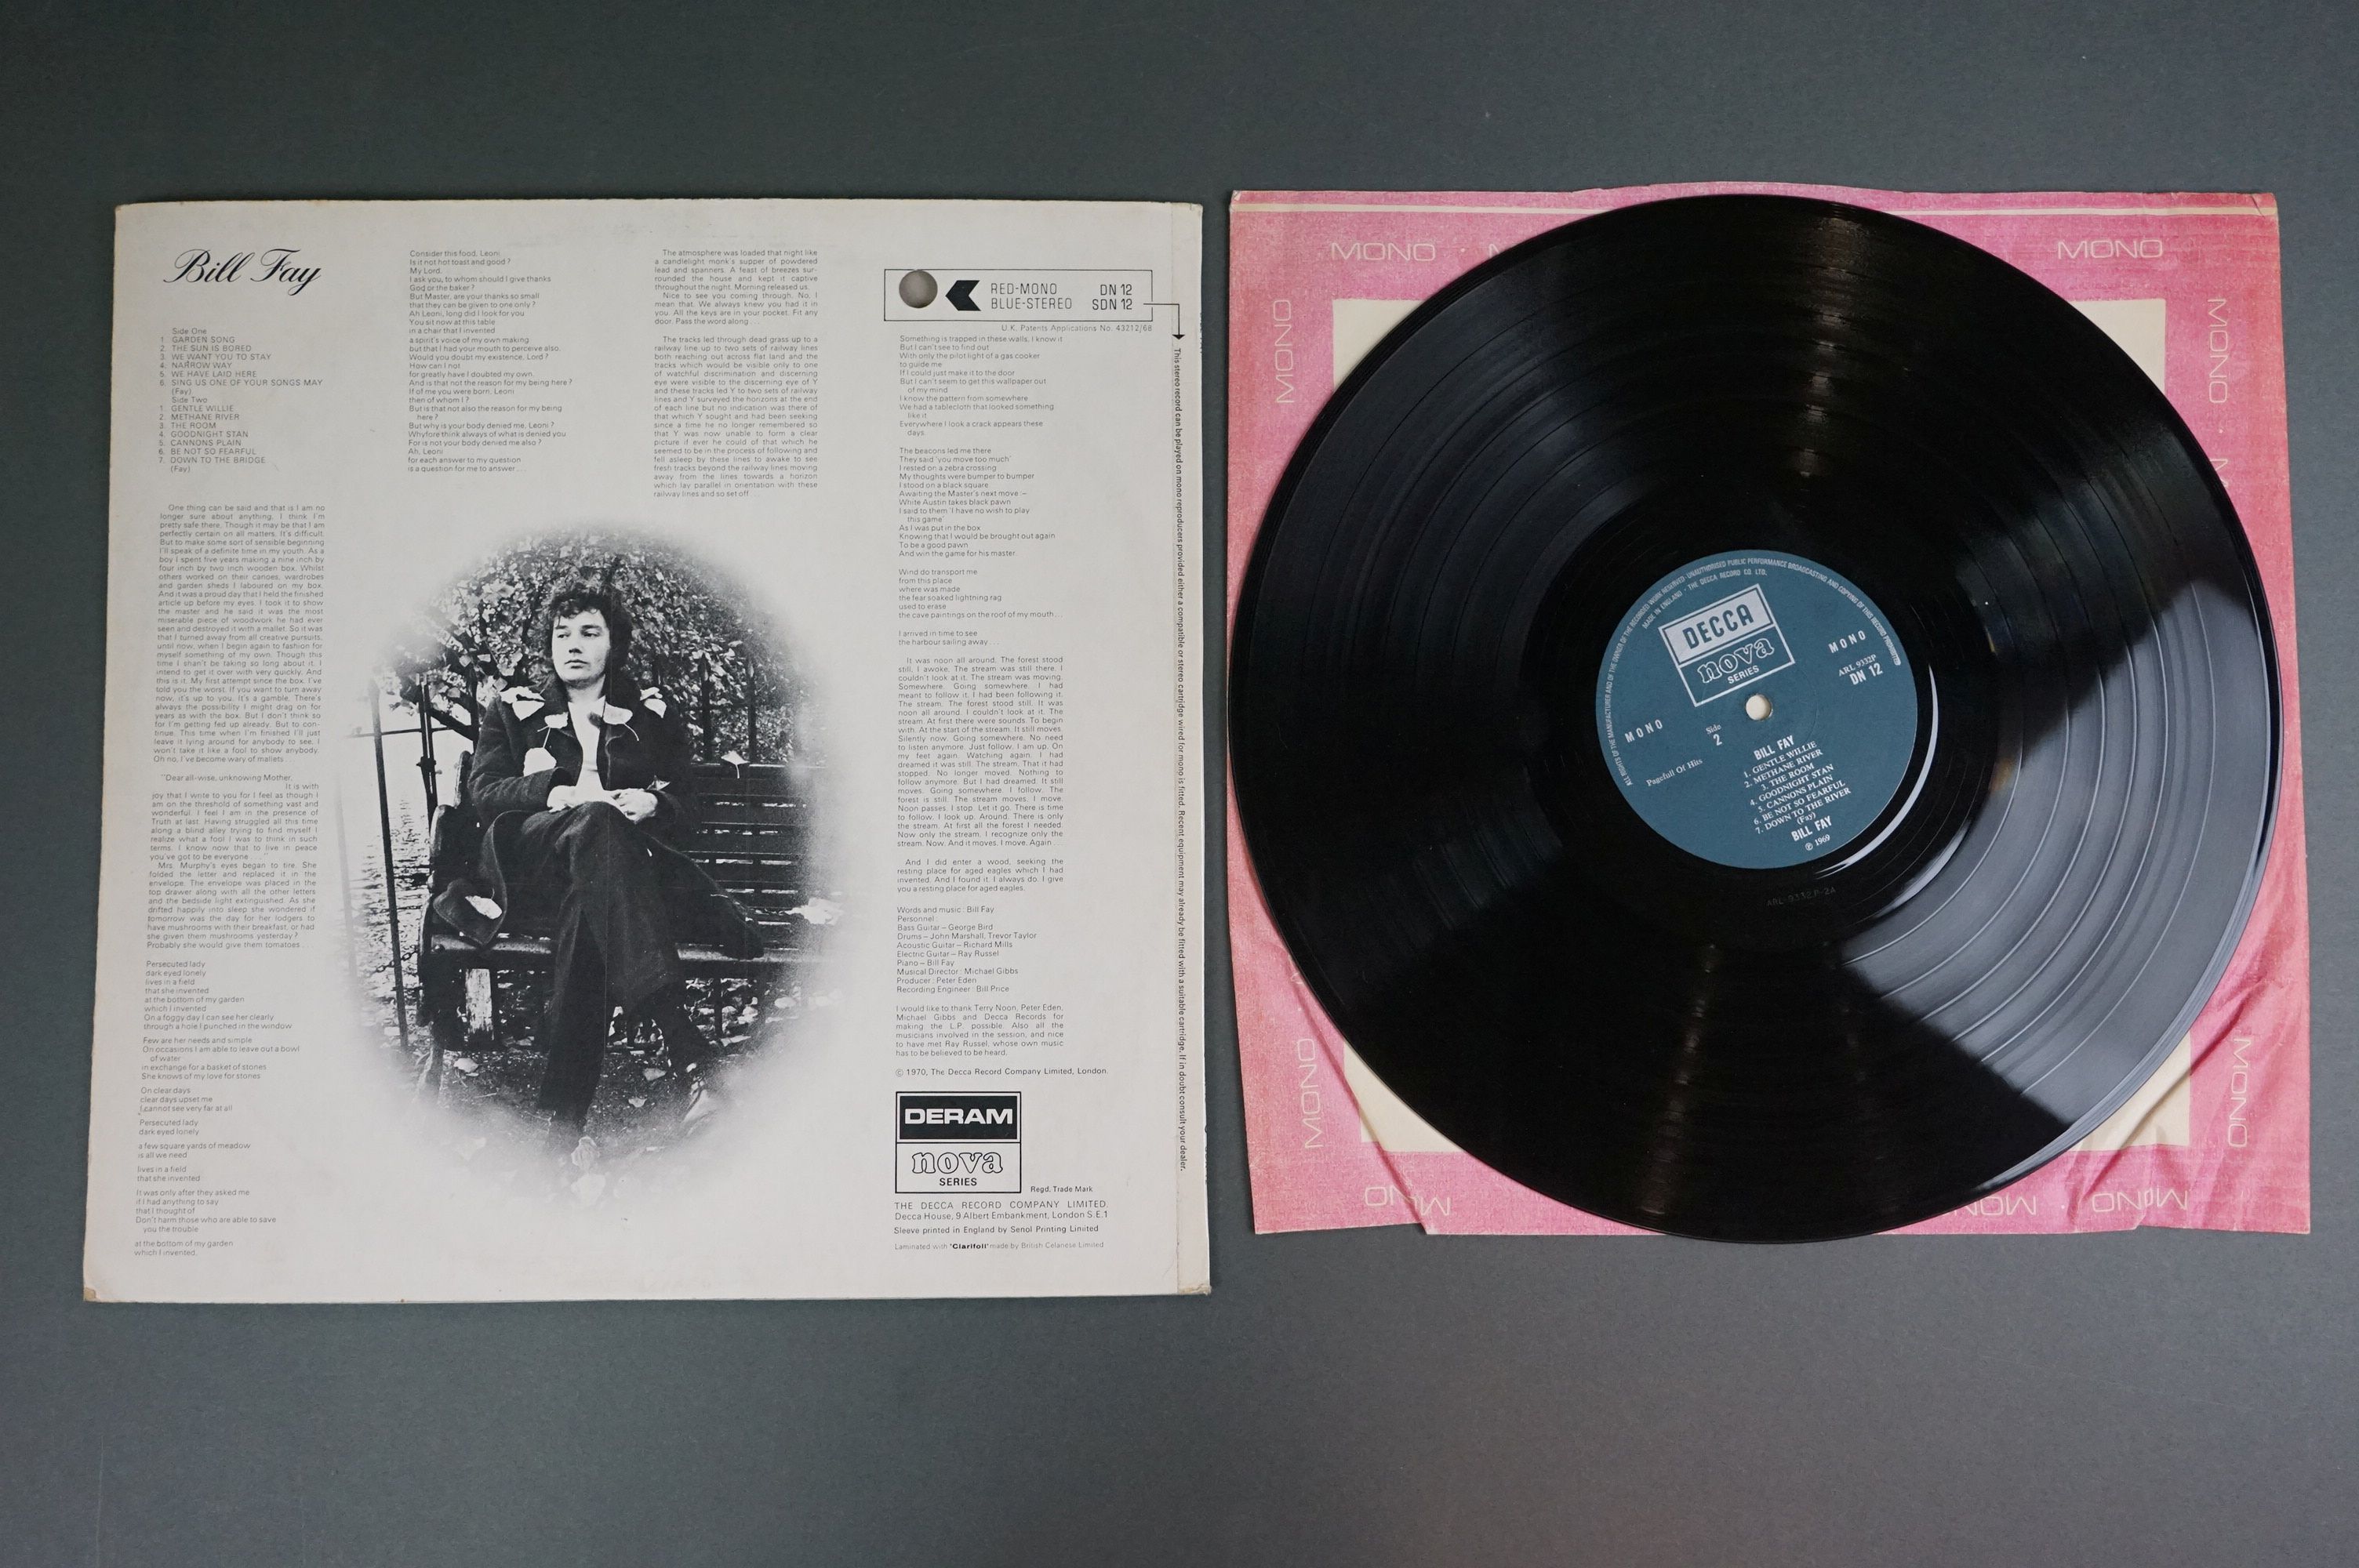 Vinyl - Bill Fay self titled LP DN12 on Decca / Nova, Decca/Nova Series shown to label and sleeve, - Image 3 of 3